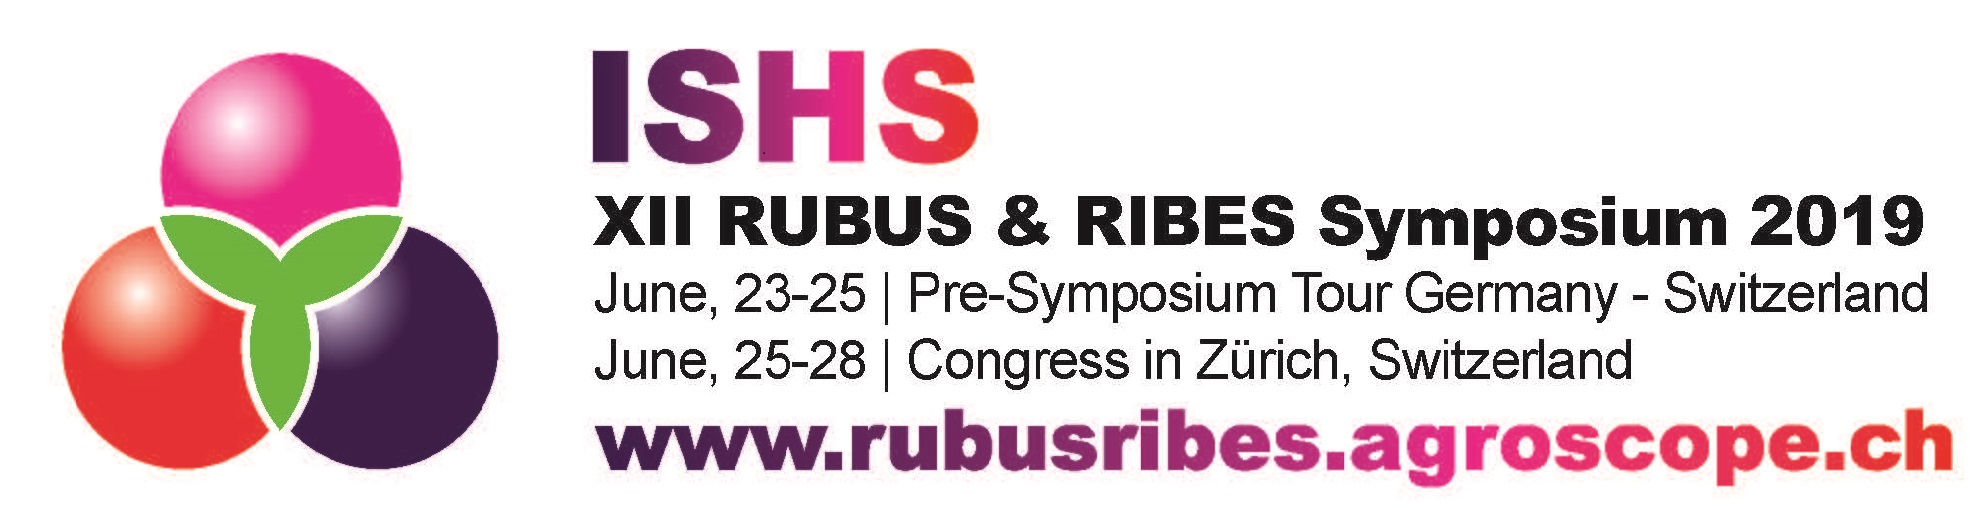 ISHS Rubus and Ribes Symposium 2019